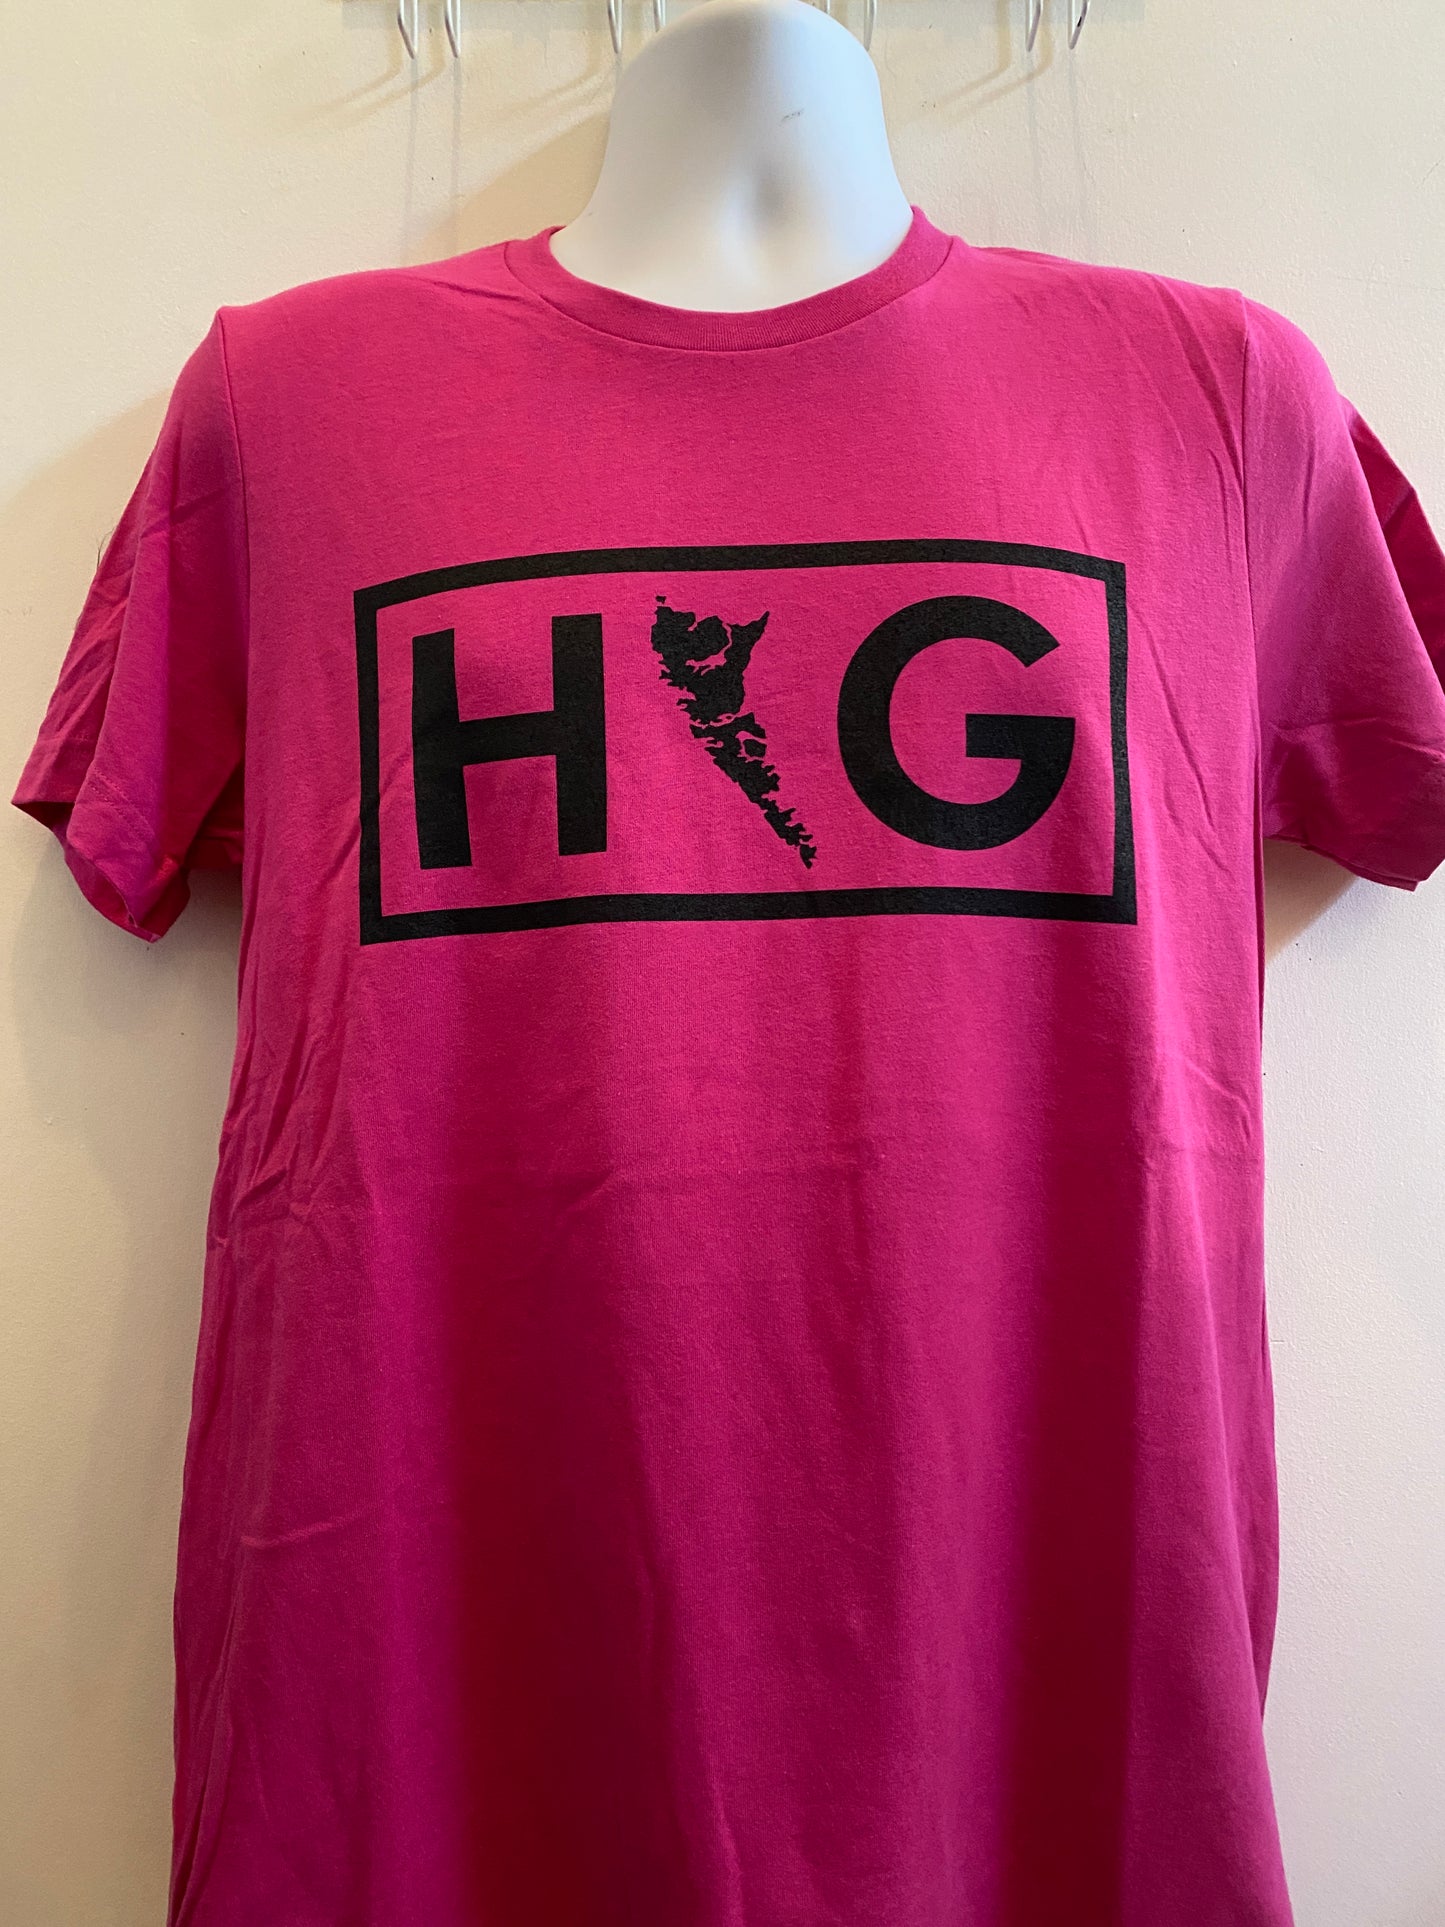 HG Island T-Shirt